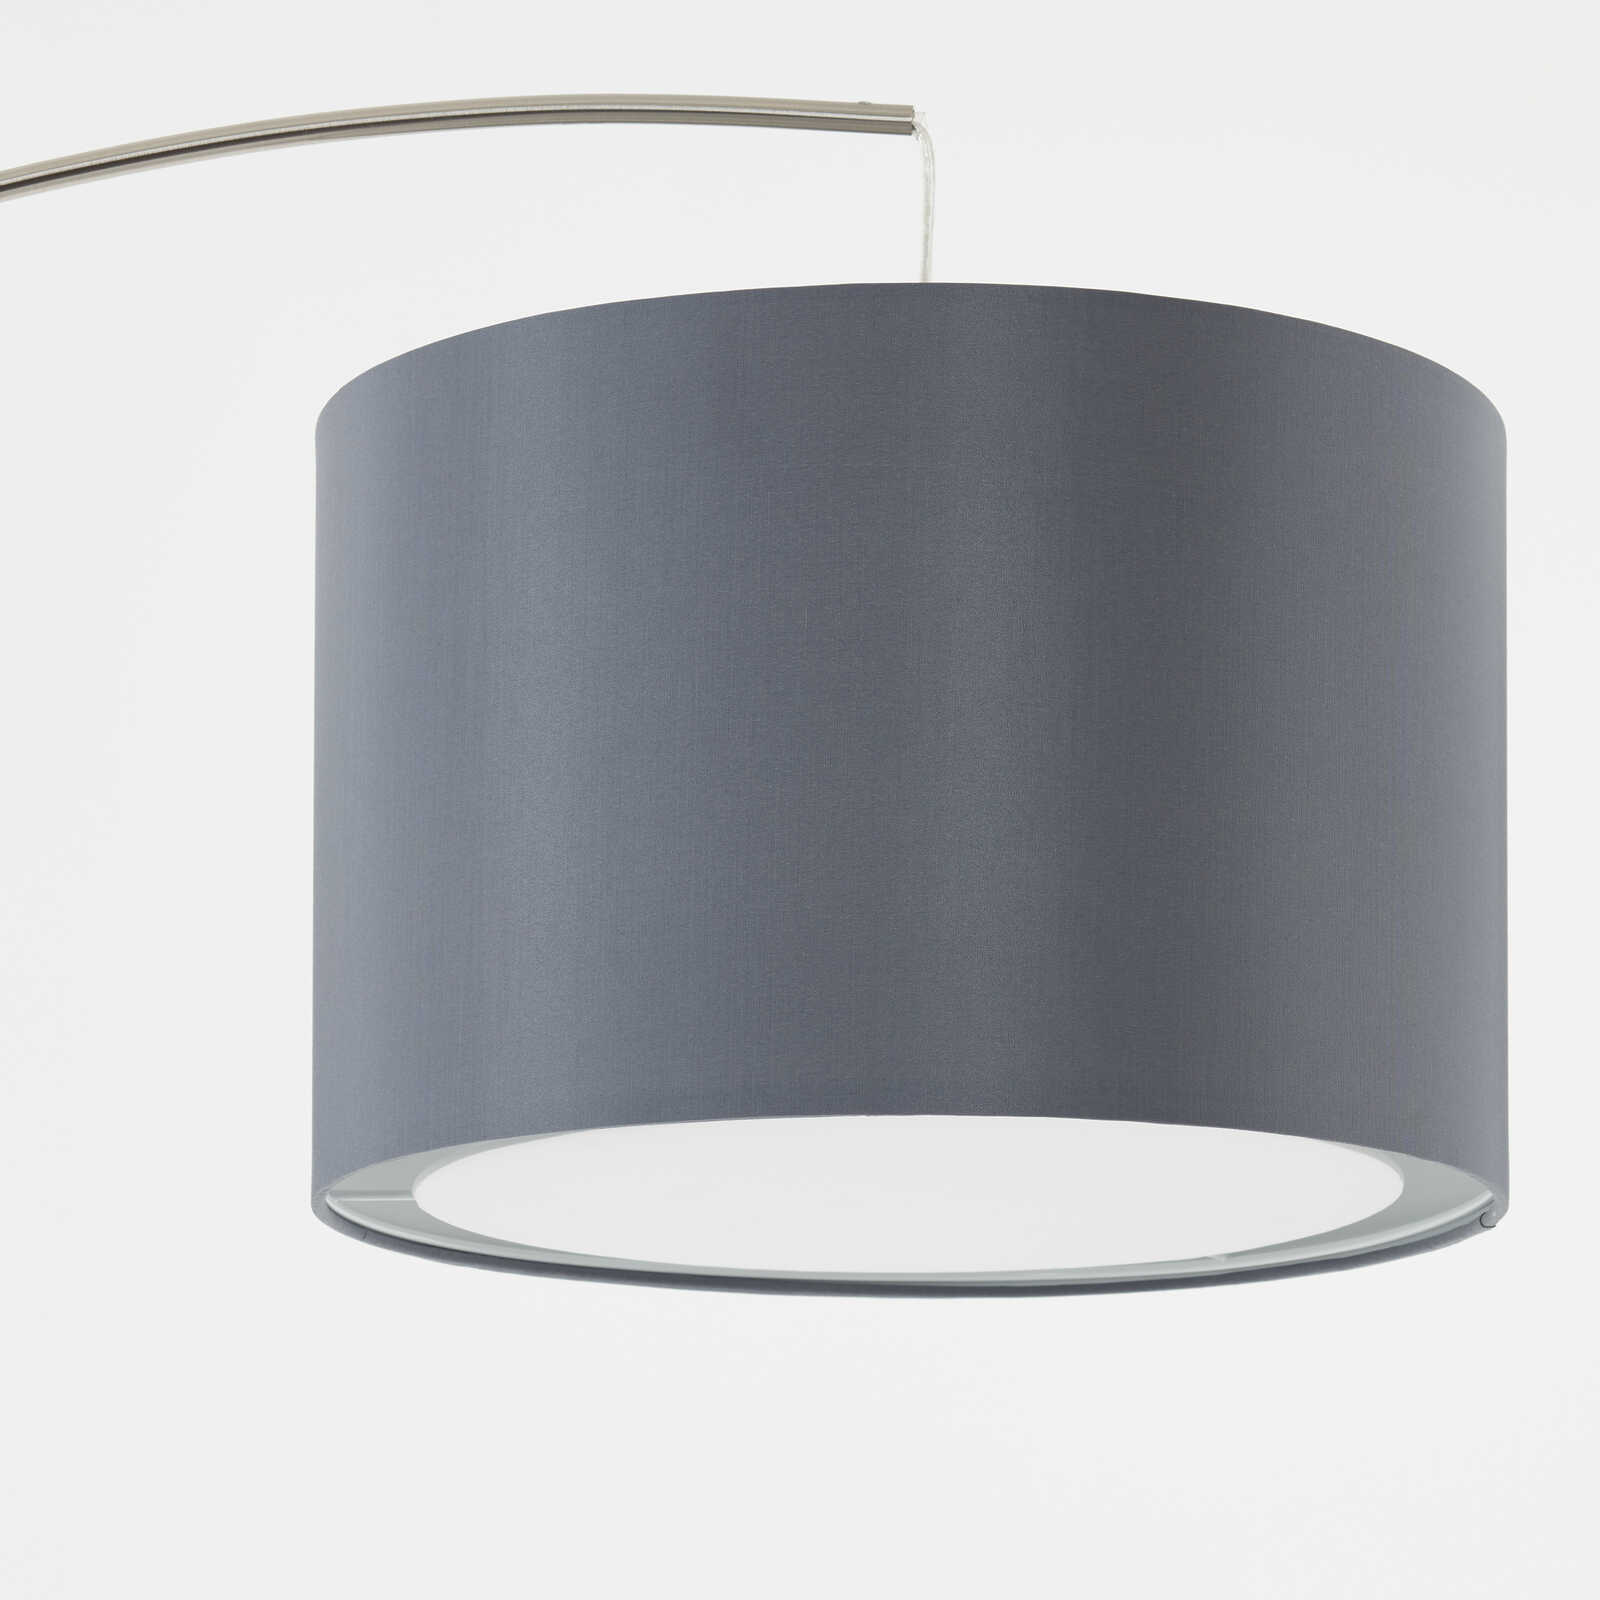             Arched textile floor lamp - Elise 2 - Grey
        